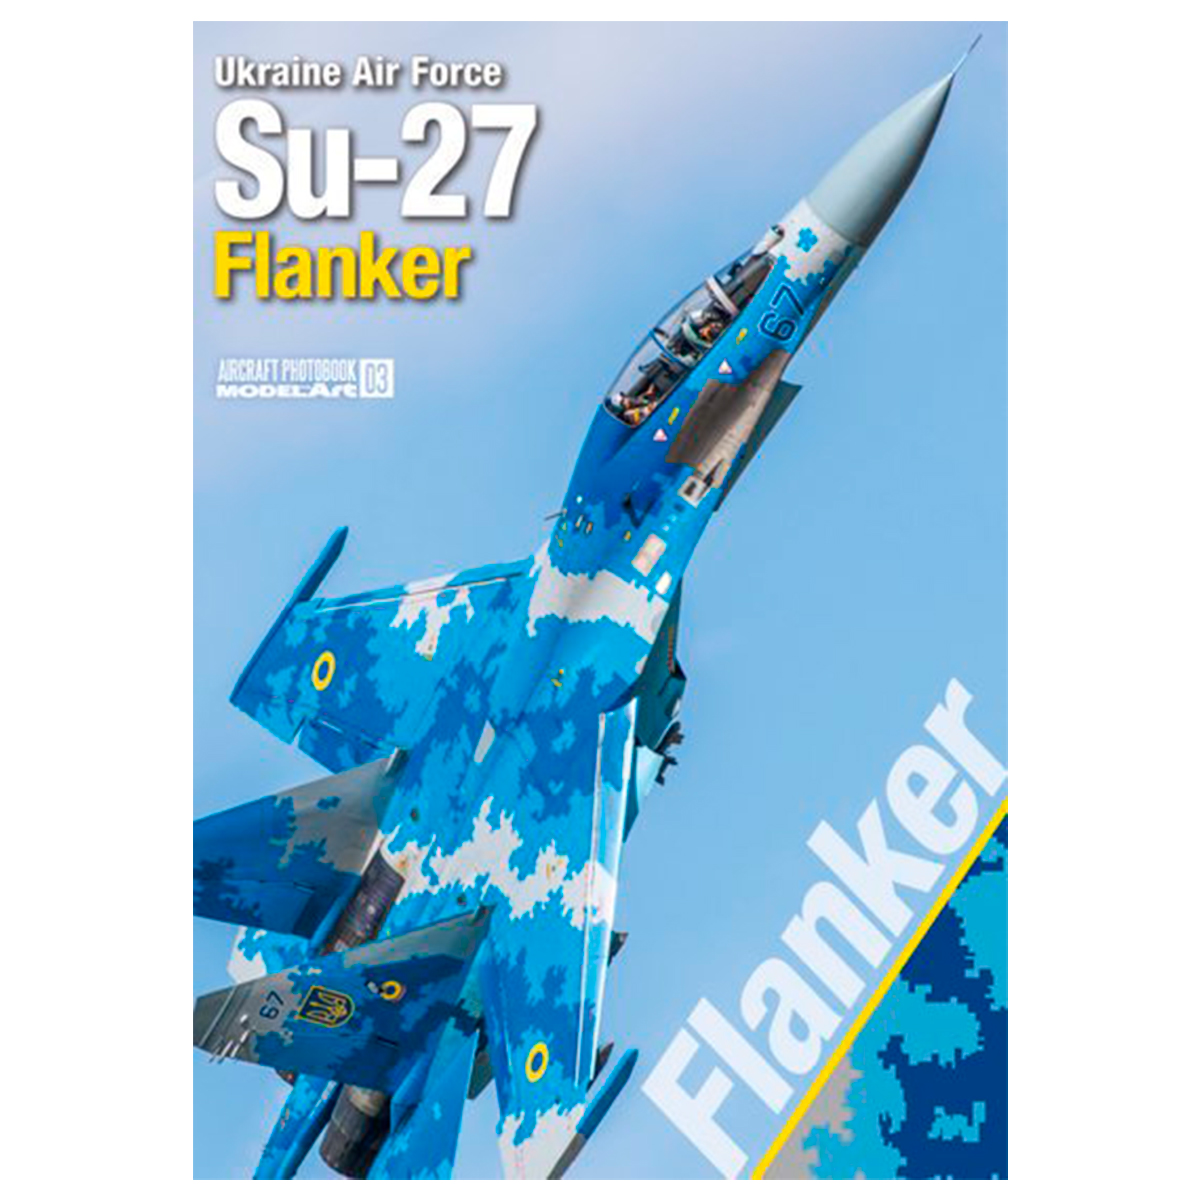 Aircraft Photo Book 03 : Ukraine Air Force Su-27 Flanker